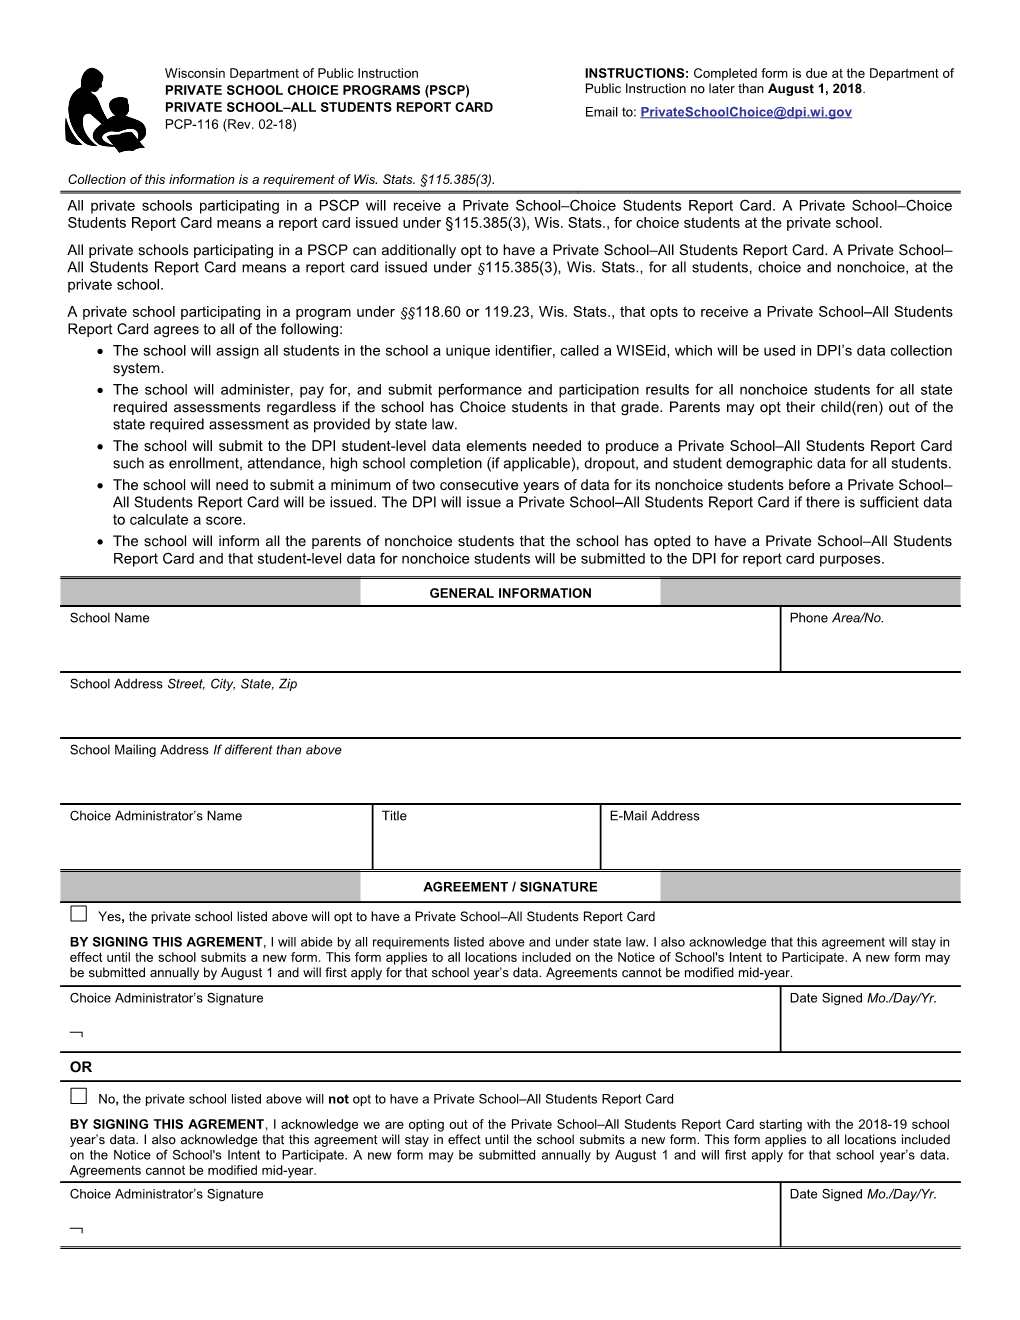 PI-MPS-PCP-2 Milwaukee Parental Choice Program Notice of School's Intent to Participate